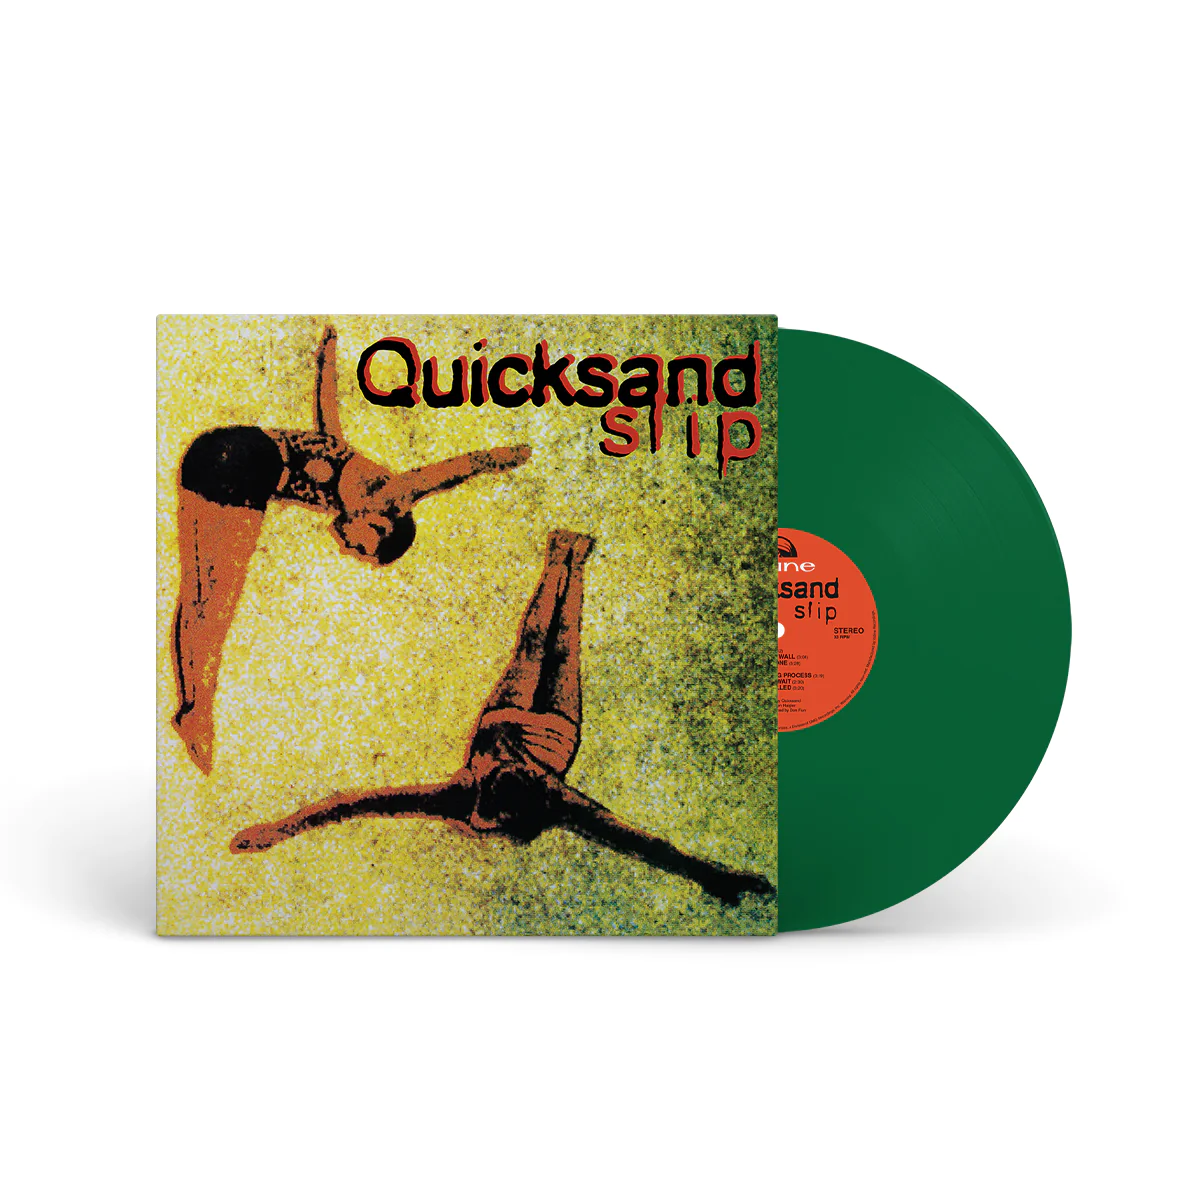 Quicksand - Slip (30th Anniversary edition) - VINYL LP